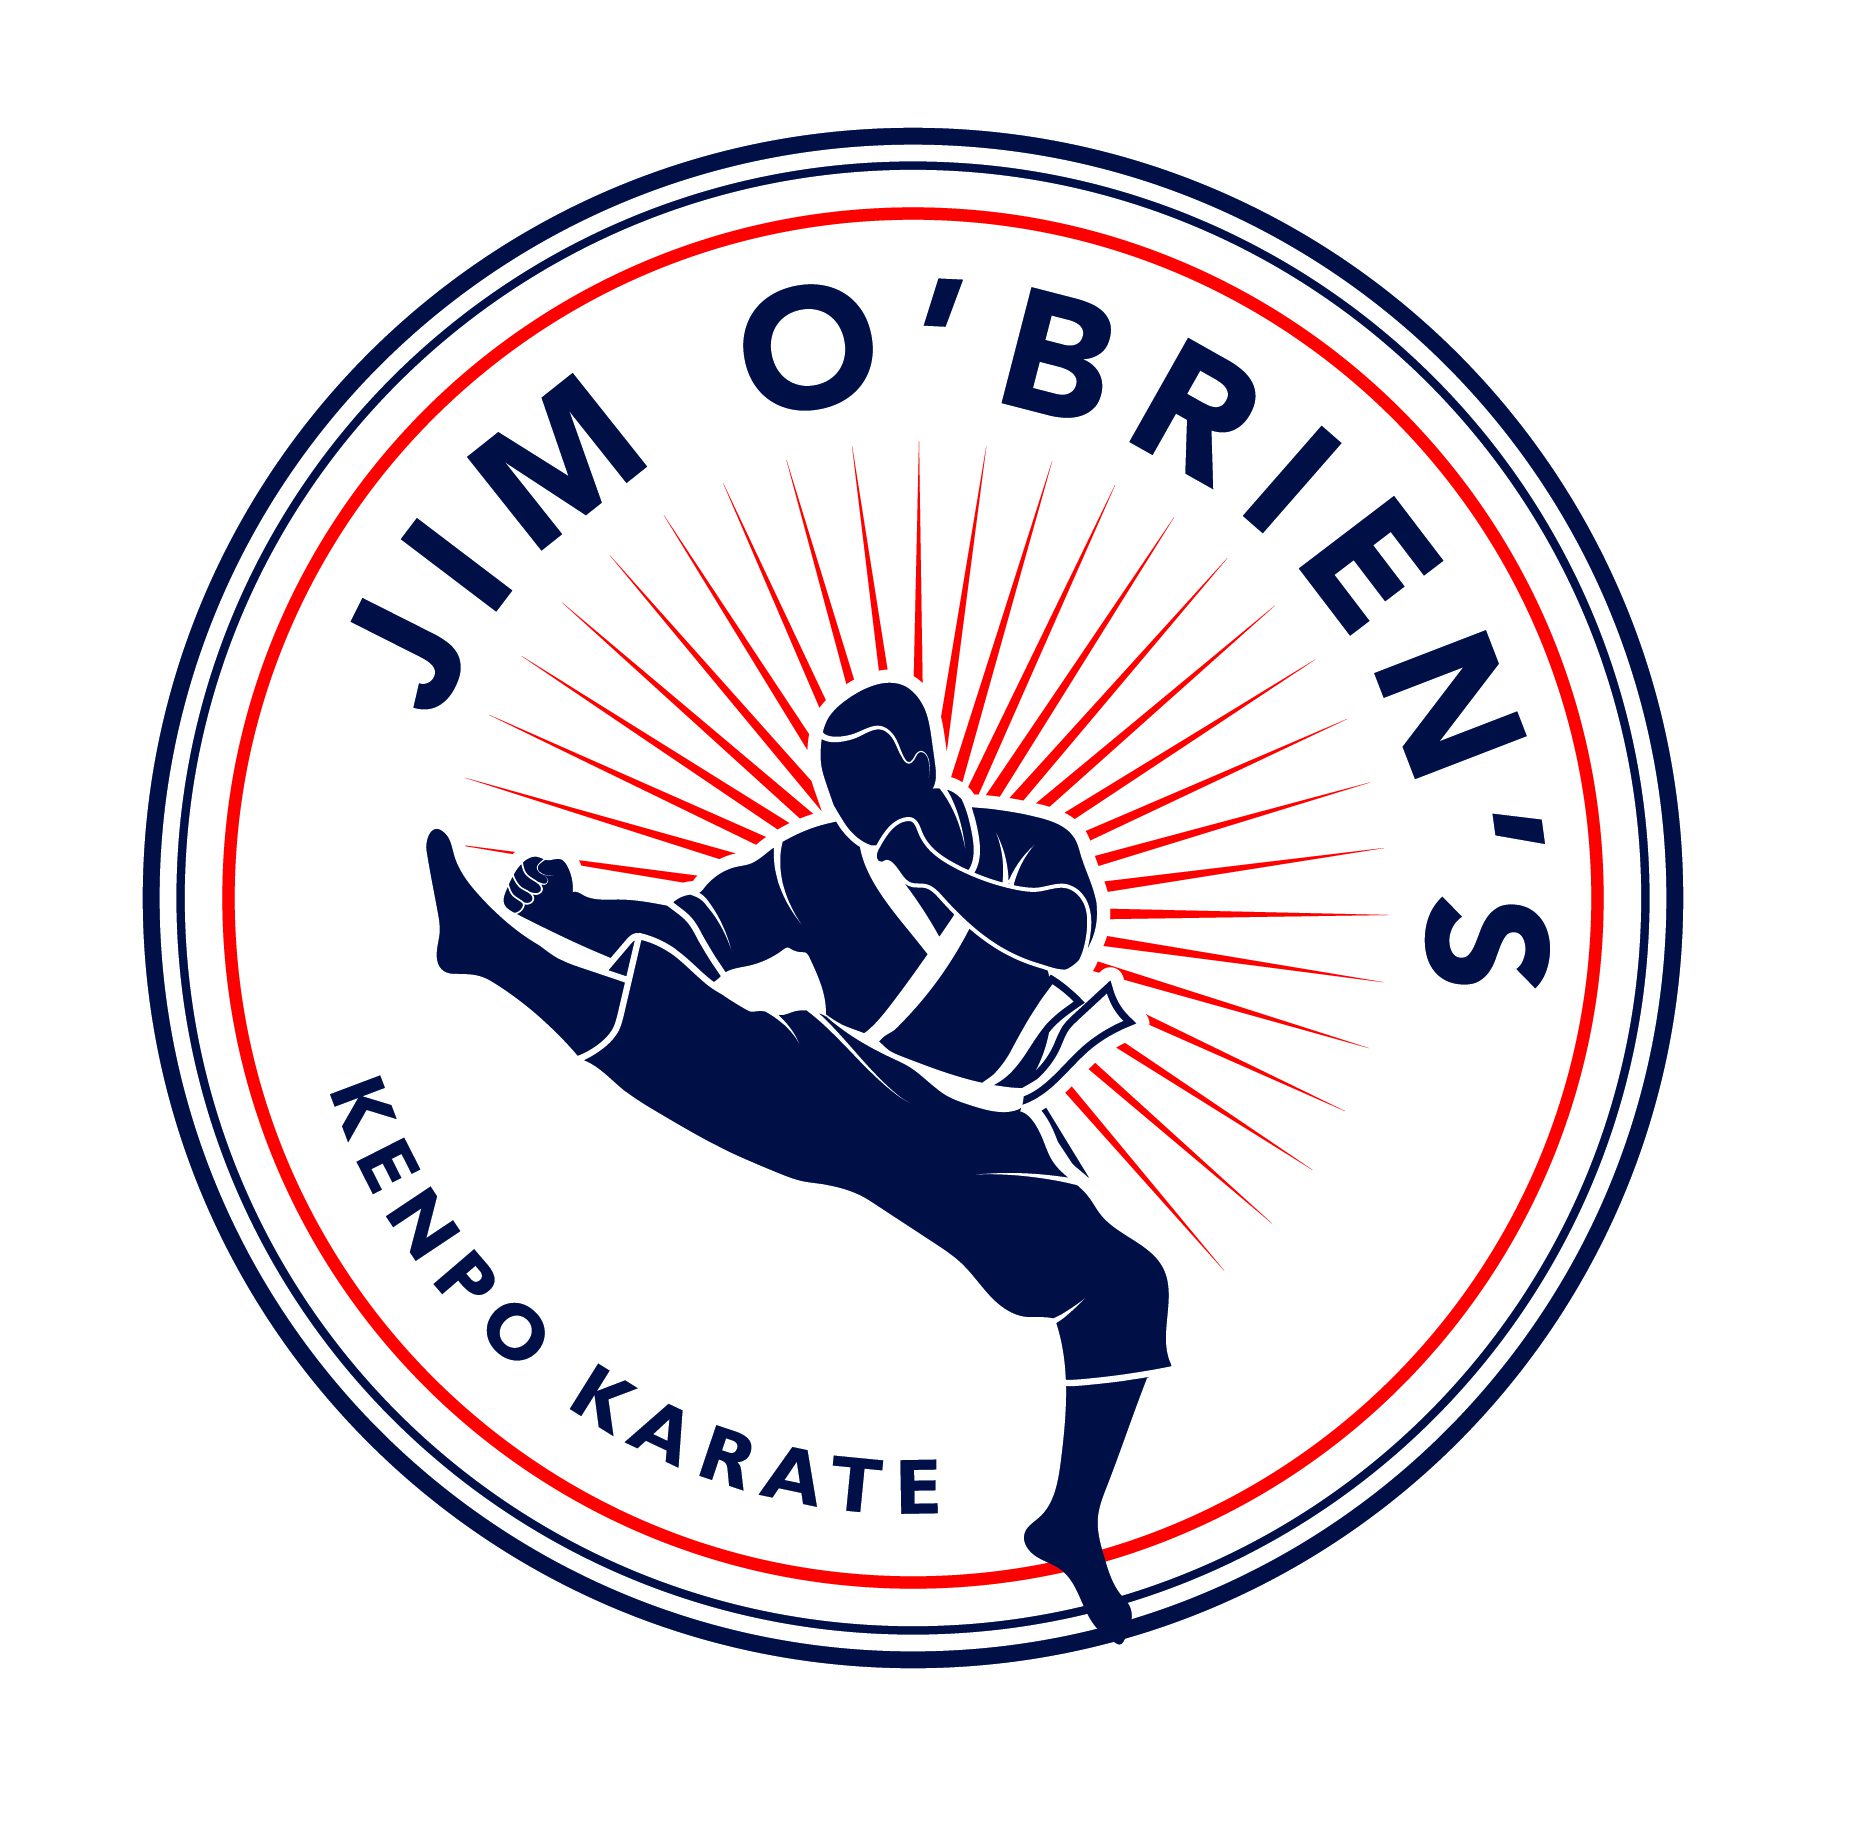 Jim O'Brien's Kenpo Karate